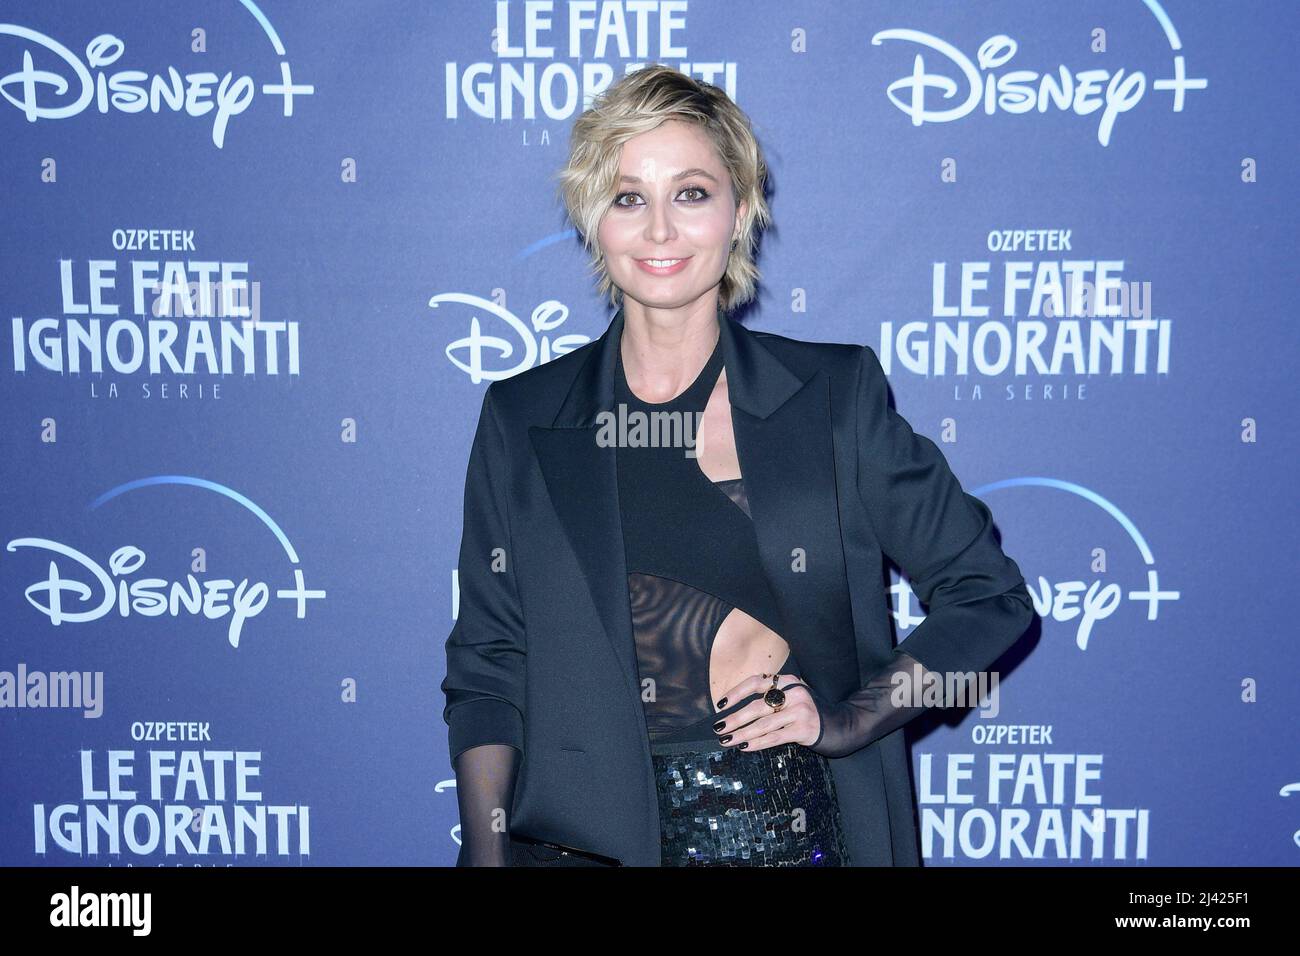 Anna Ferzetti attends the red carpet of the Disney series Le fate ...